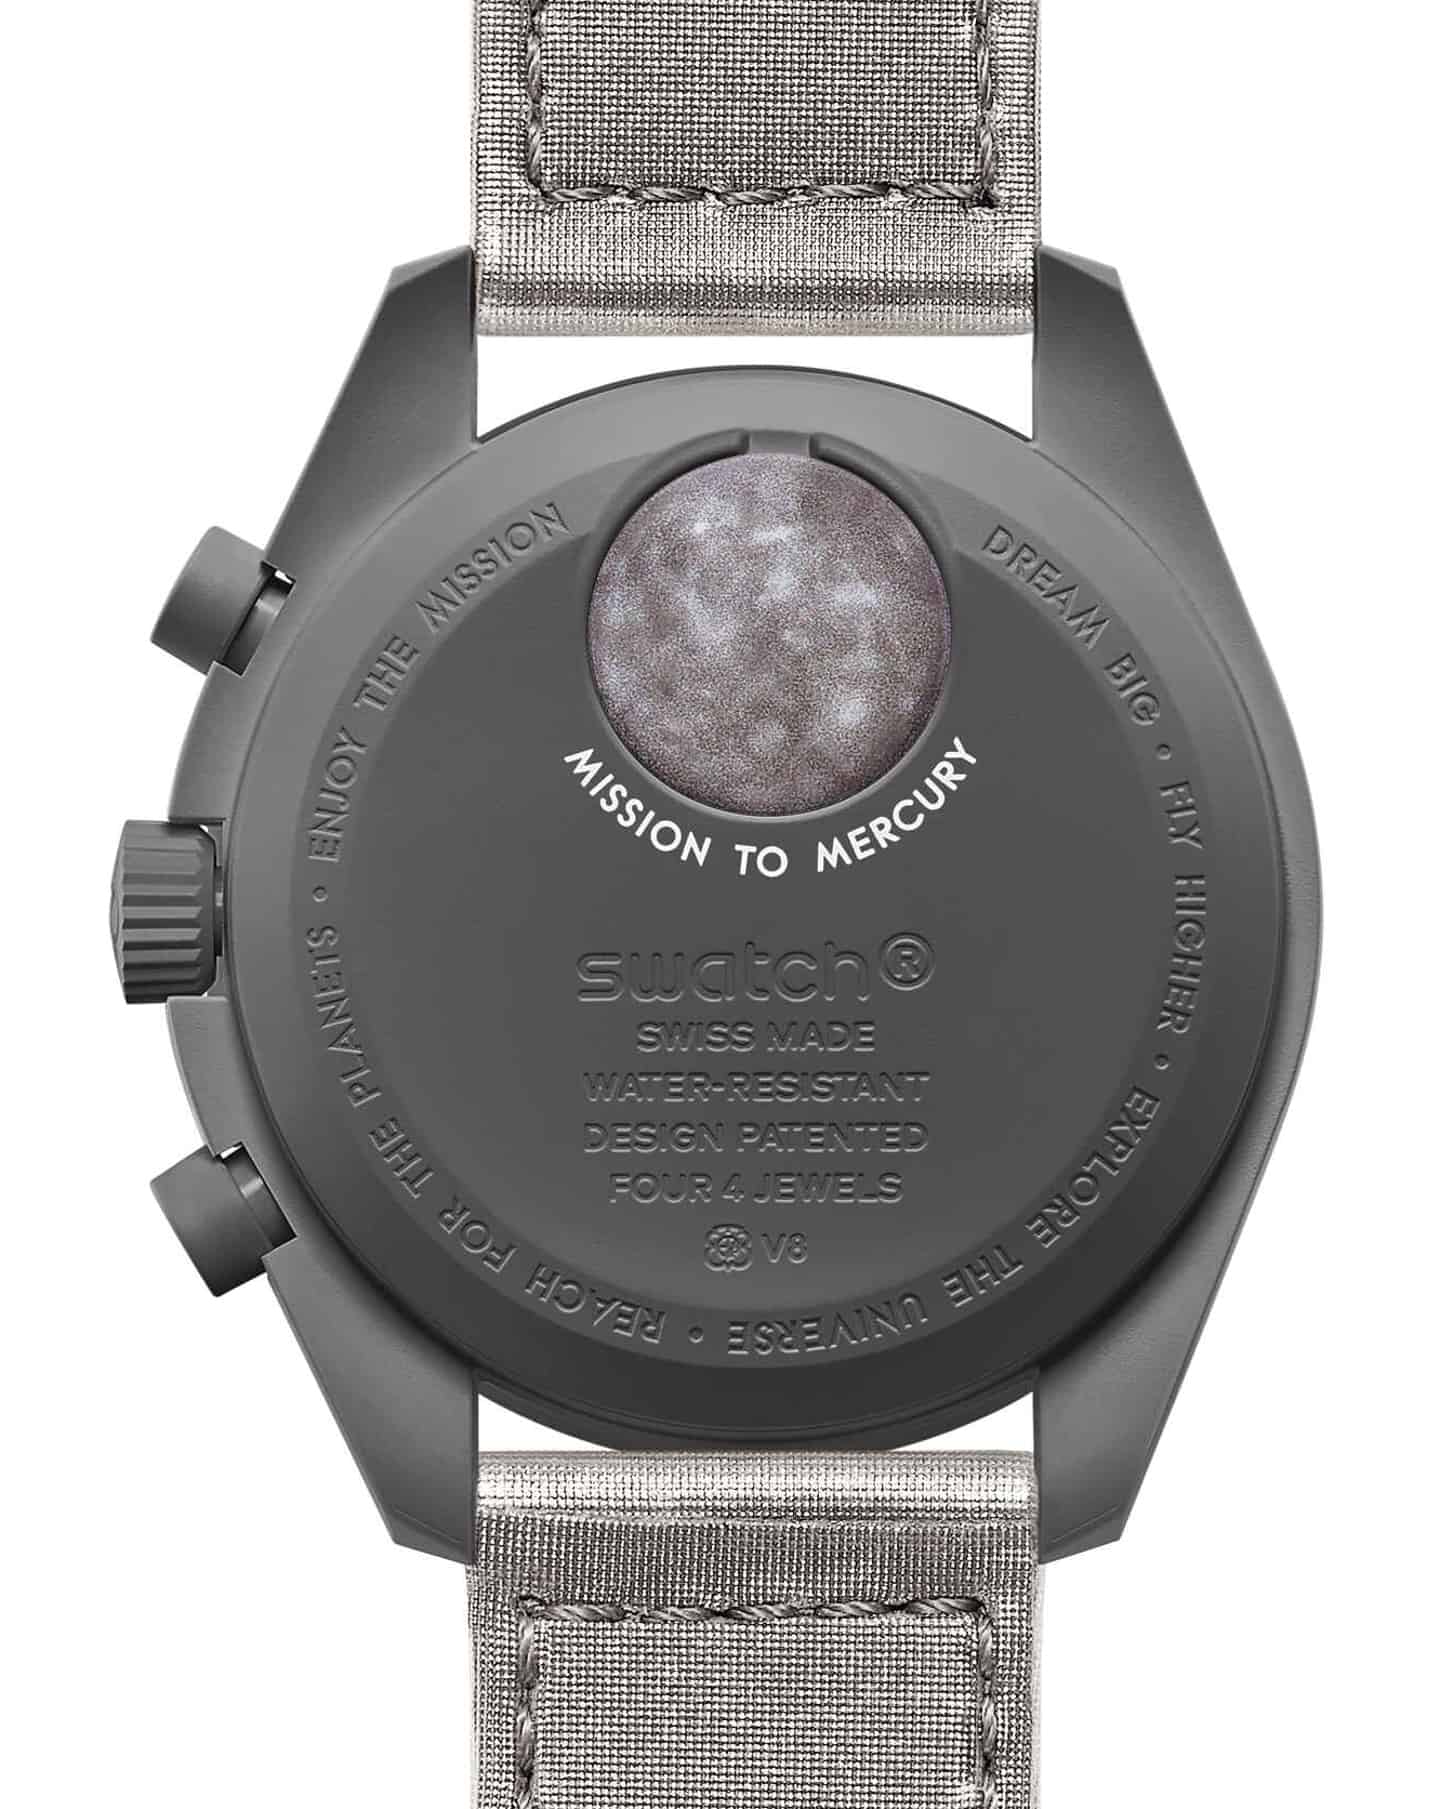 Omega Swatch Speedmaster Bioceramic MoonSwatch Mission to Merury